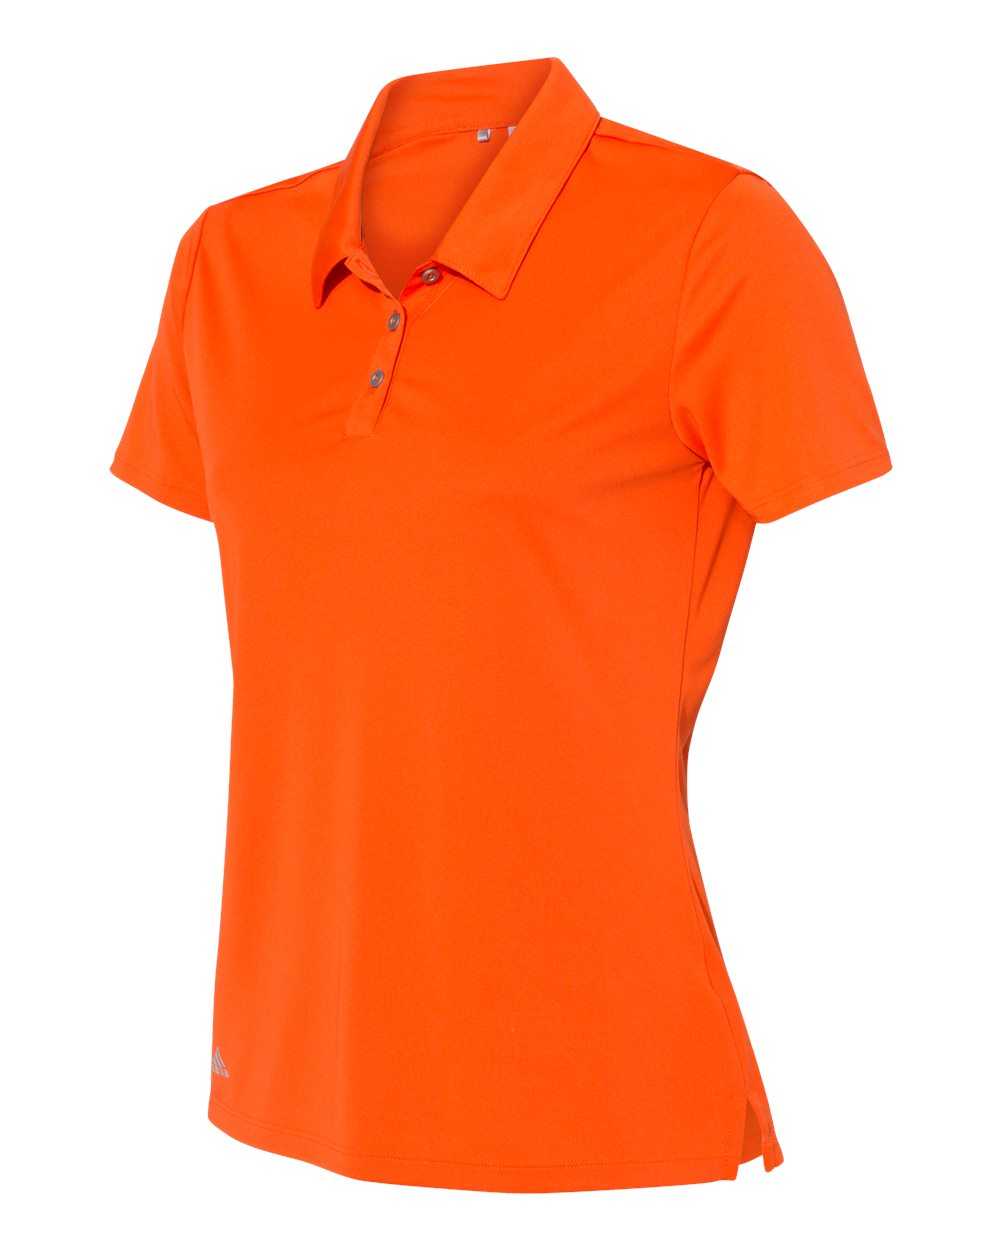 Adidas A231 Women's Performance Sport Shirt - Orange - HIT a Double